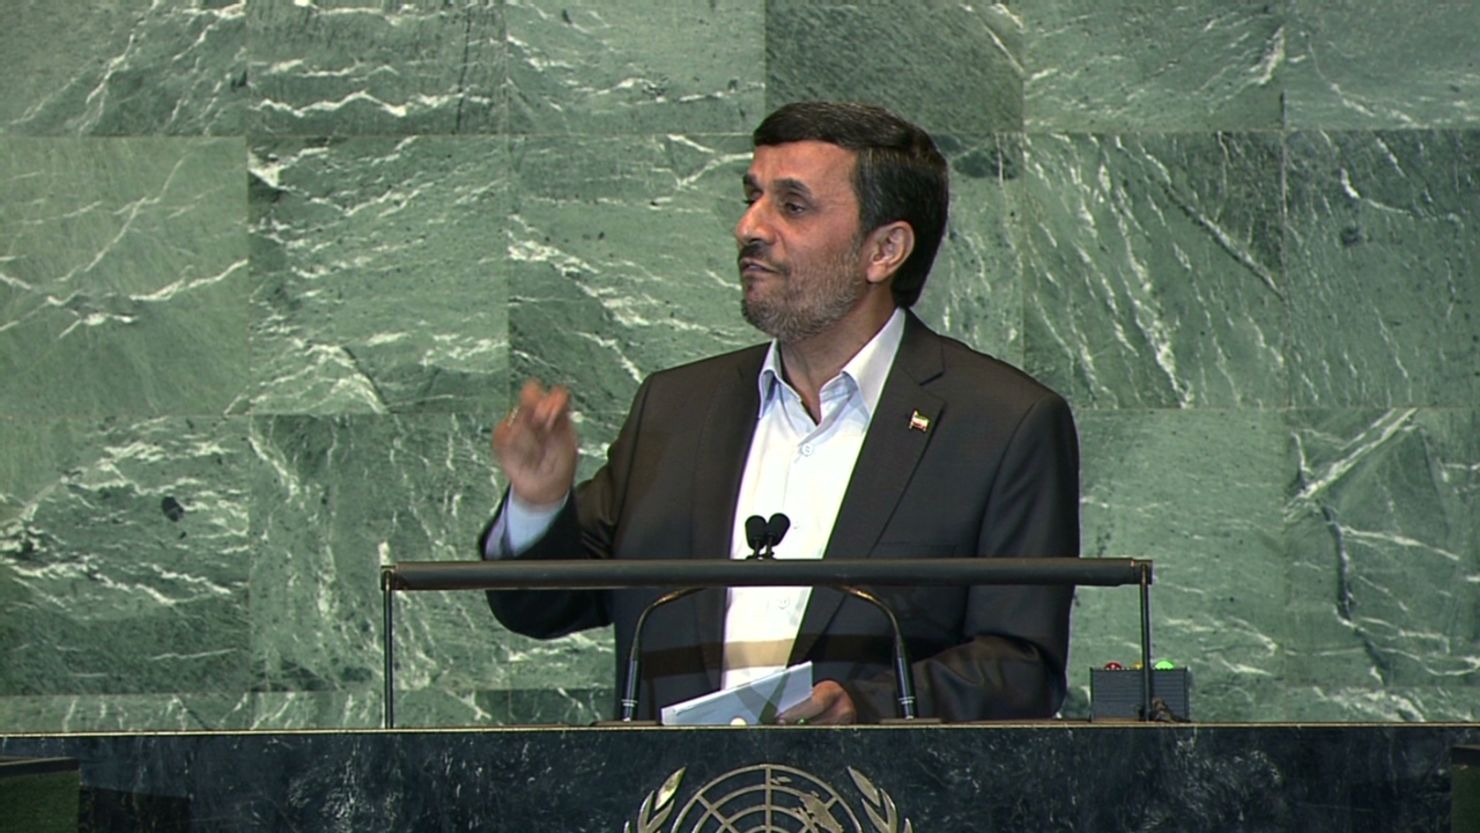 Some of the stereotypes of Iranian President Mahmoud Ahmadinejad fall short of the mark, says Jim Walsh.